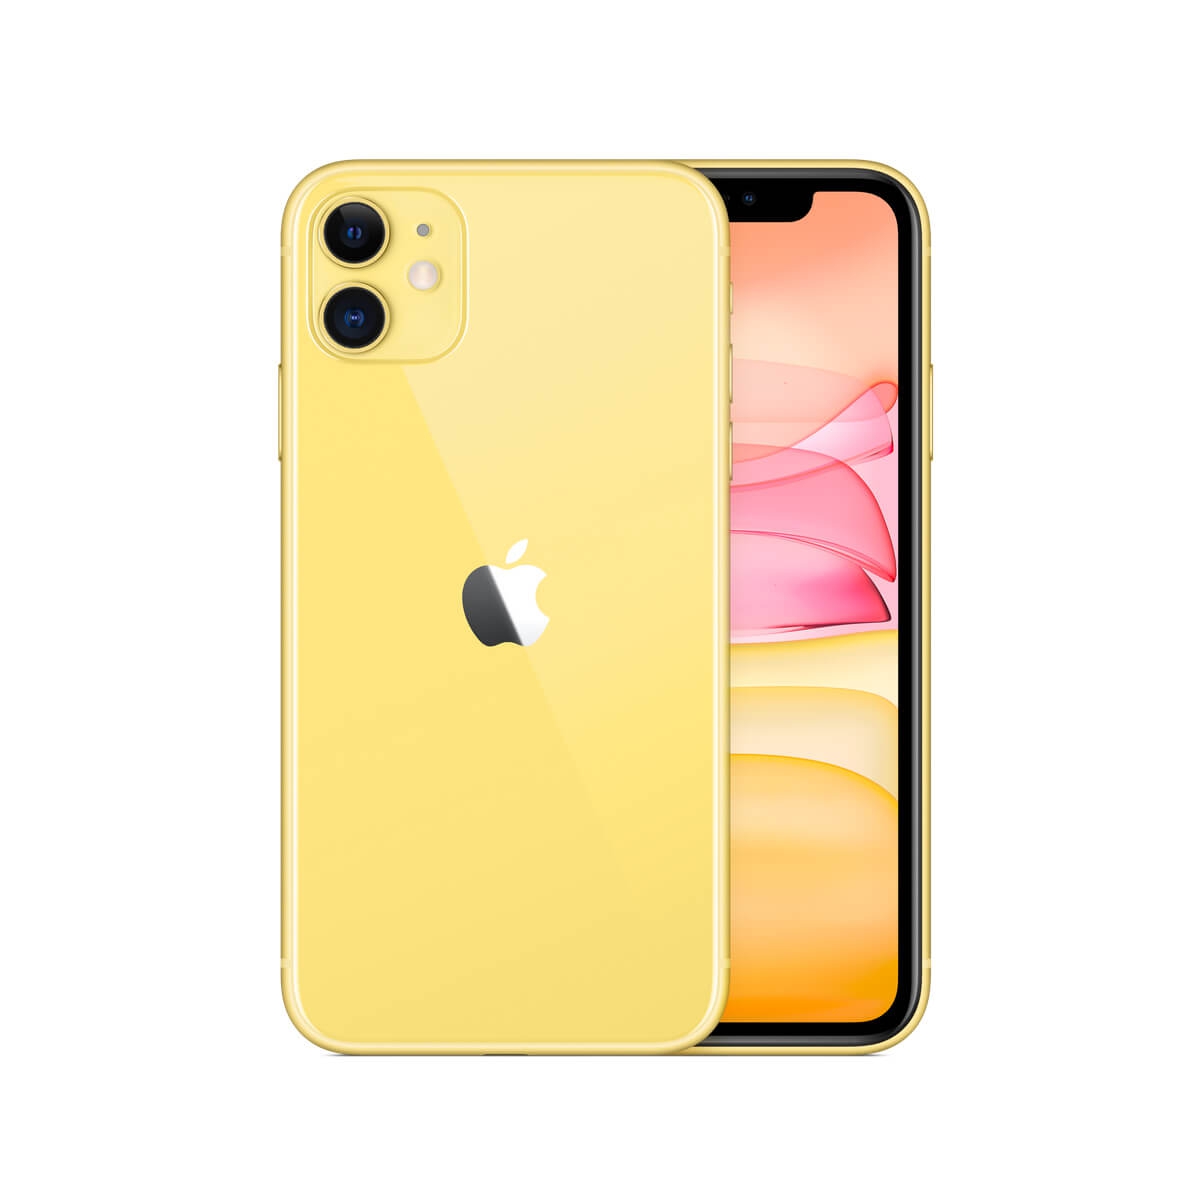 2019 年的 iPhone 11 黃